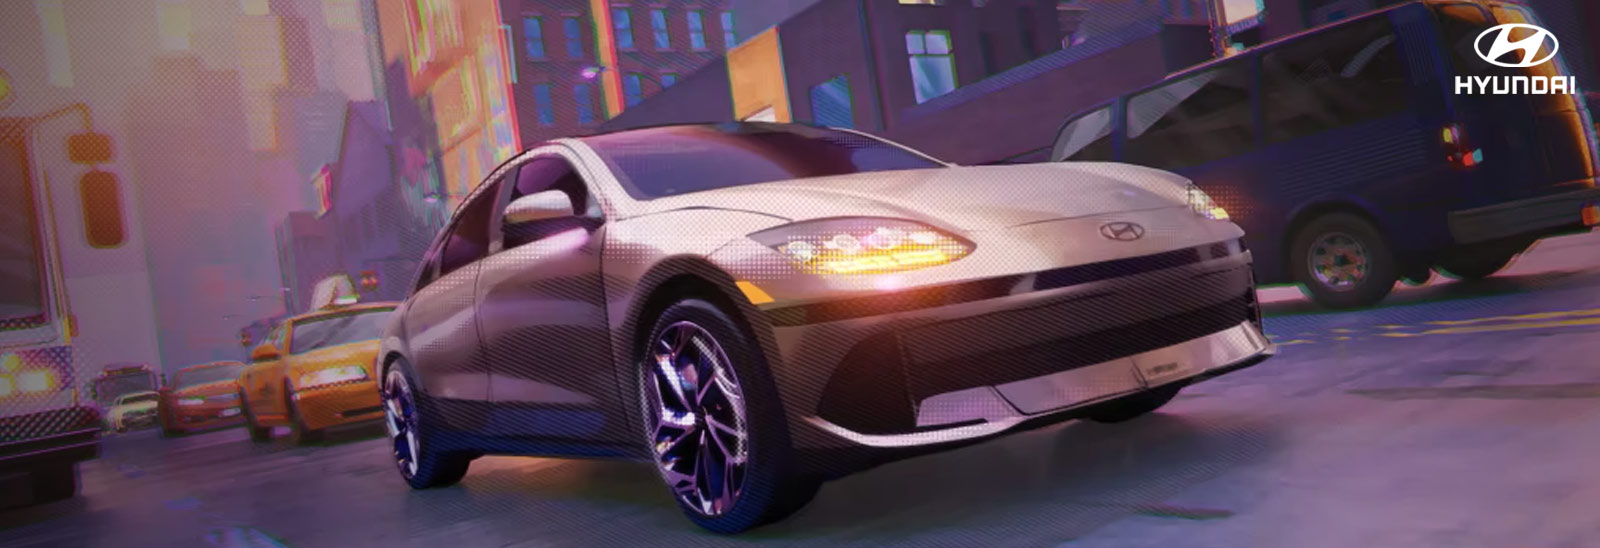 EV Prophecy Concept de Hyundai Motor en película animada de Spider-Man